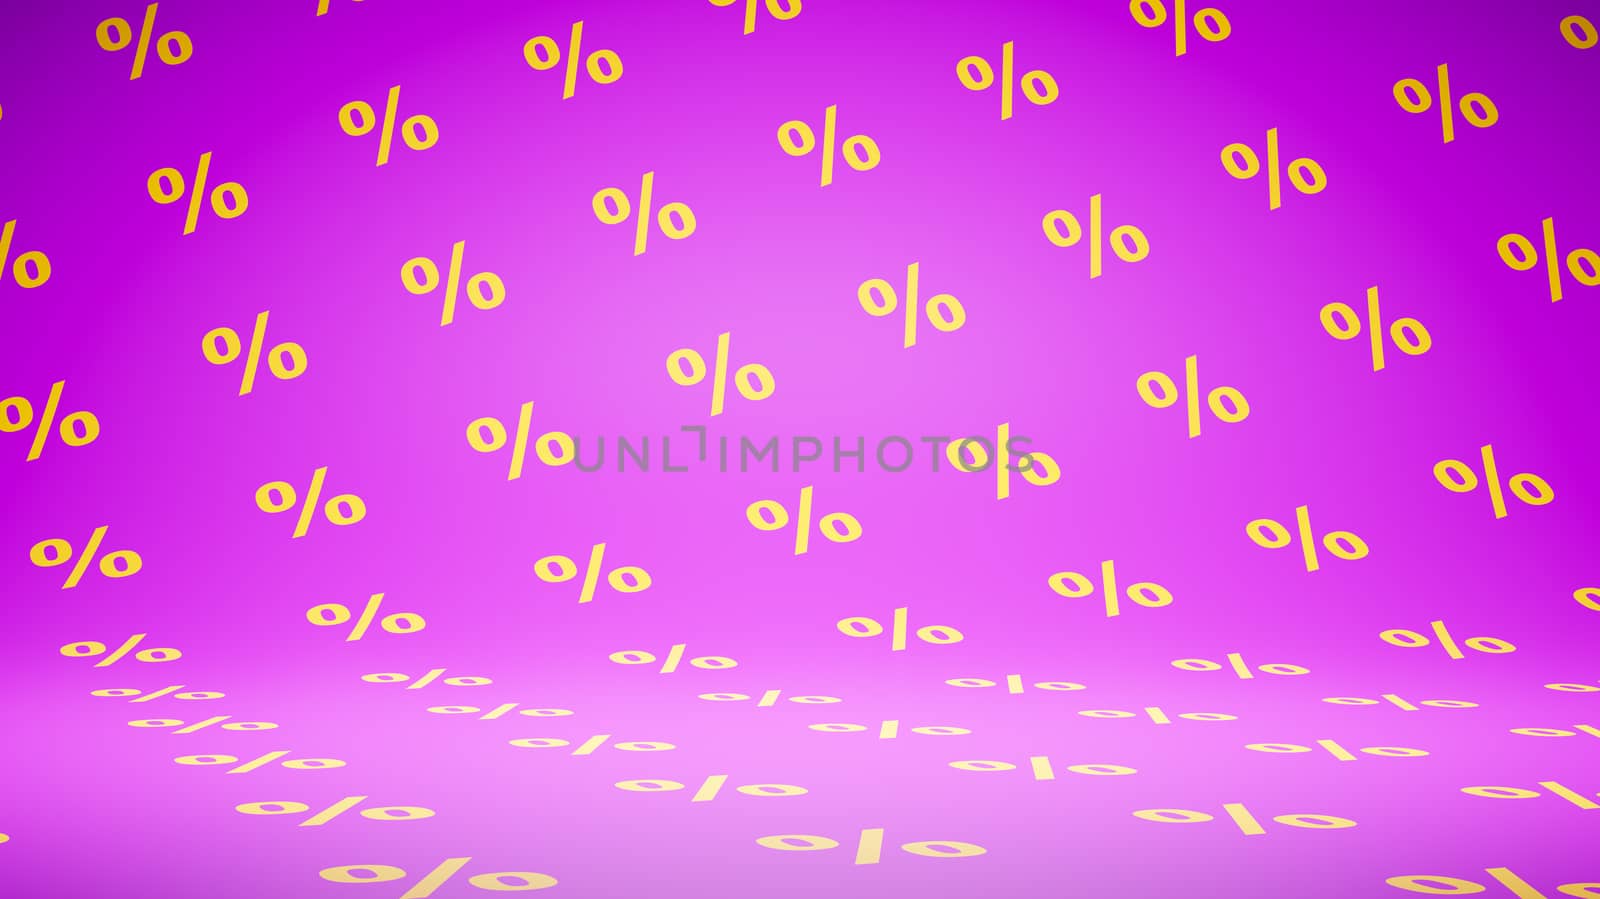 Empty Blank Purple and Yellow Percent Symbol Pattern Studio Background 3D Render Illustration